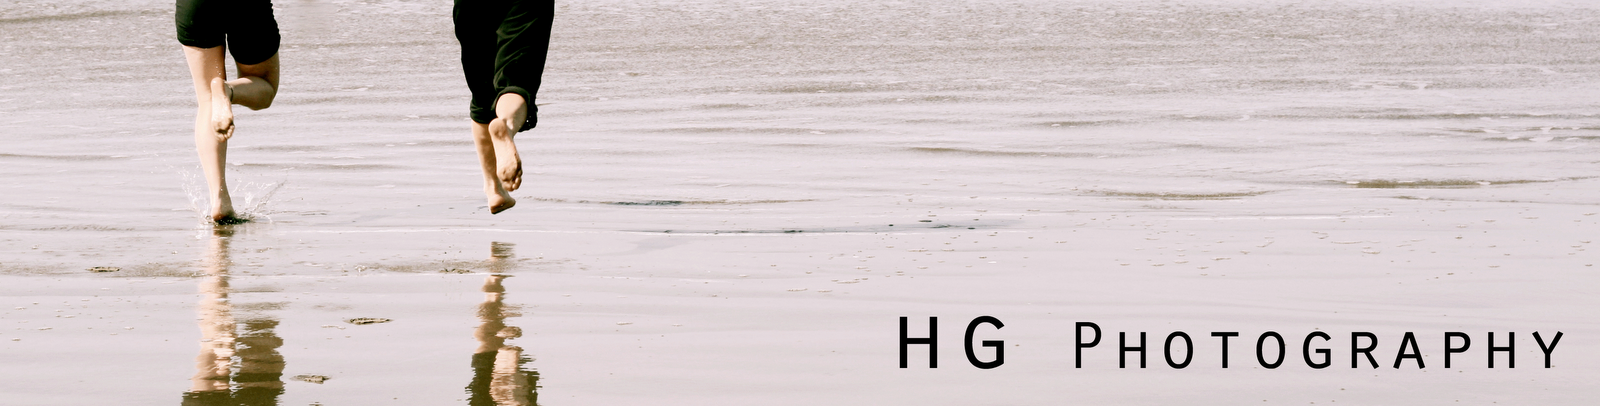 HG Photography